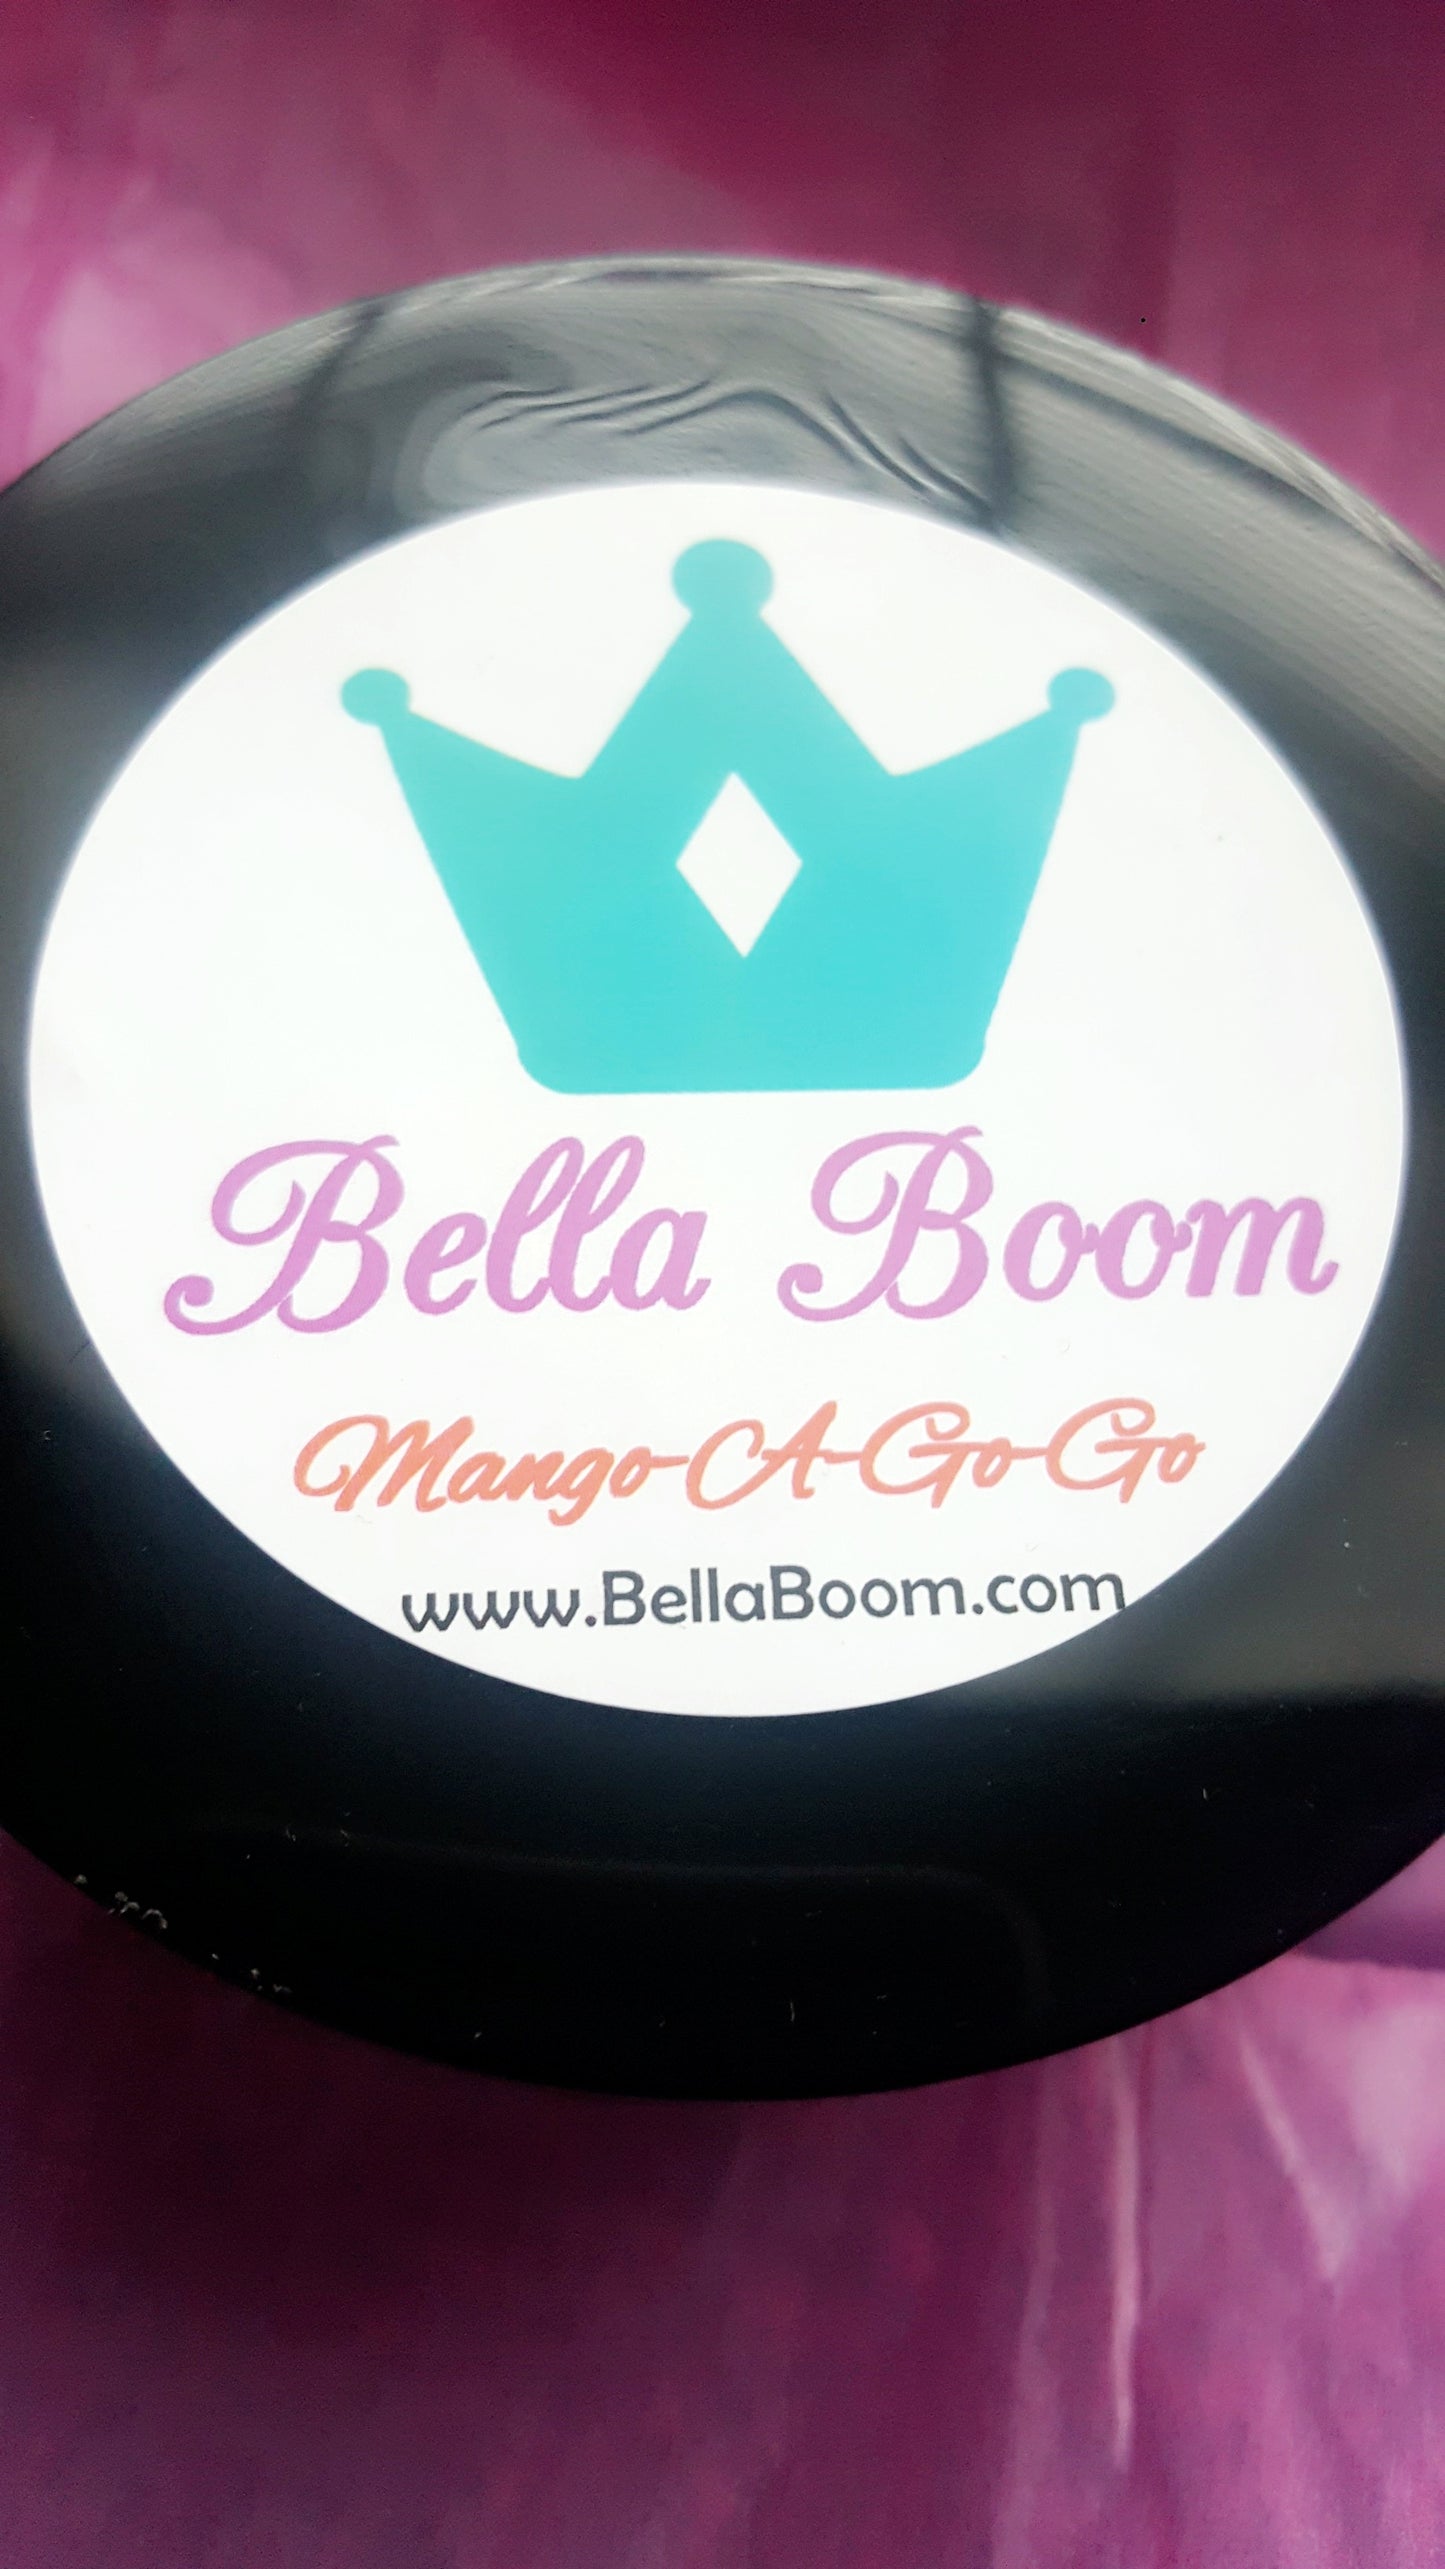 Bella Boom "Mango- A- Go Go"